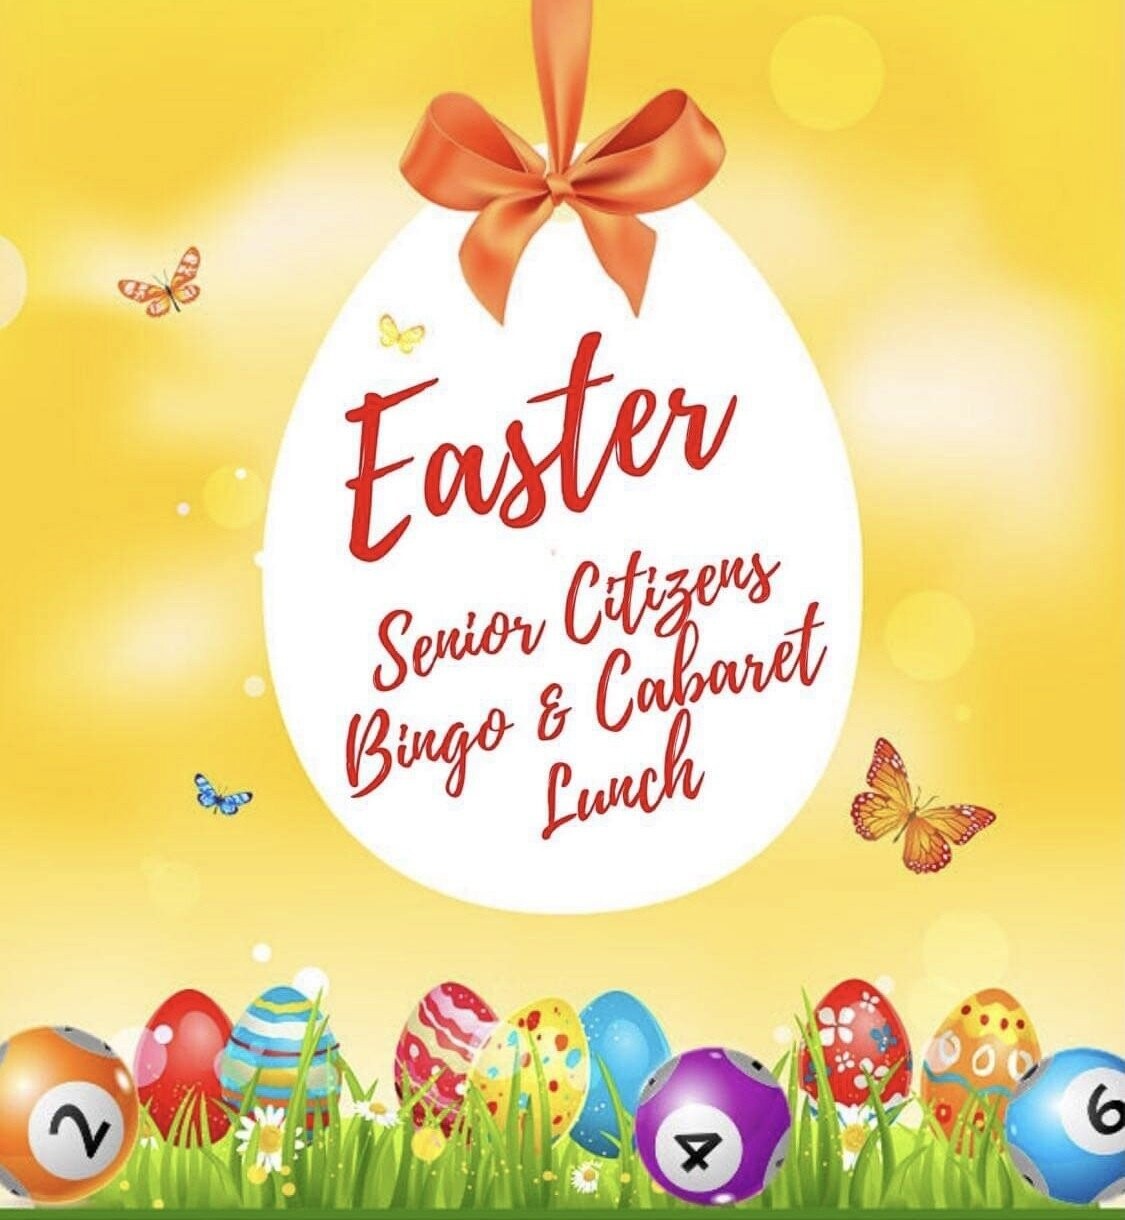 Easter Senior's Citizens Bingo & Cabaret Lunch